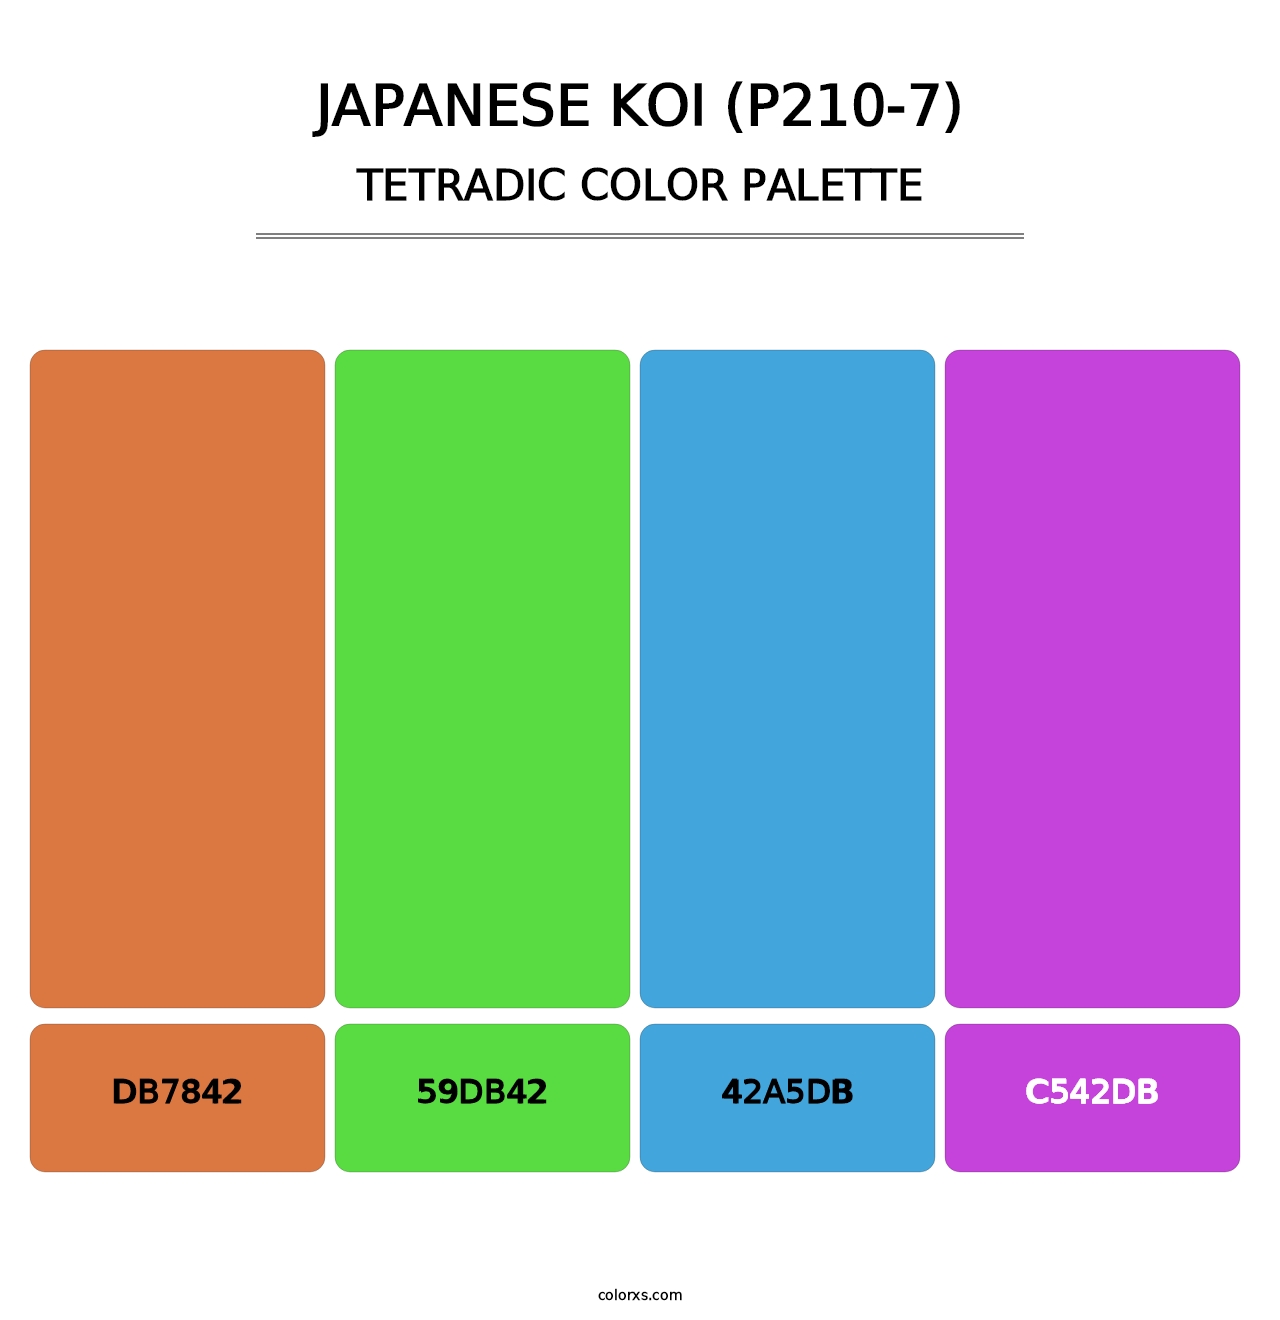 Japanese Koi (P210-7) - Tetradic Color Palette